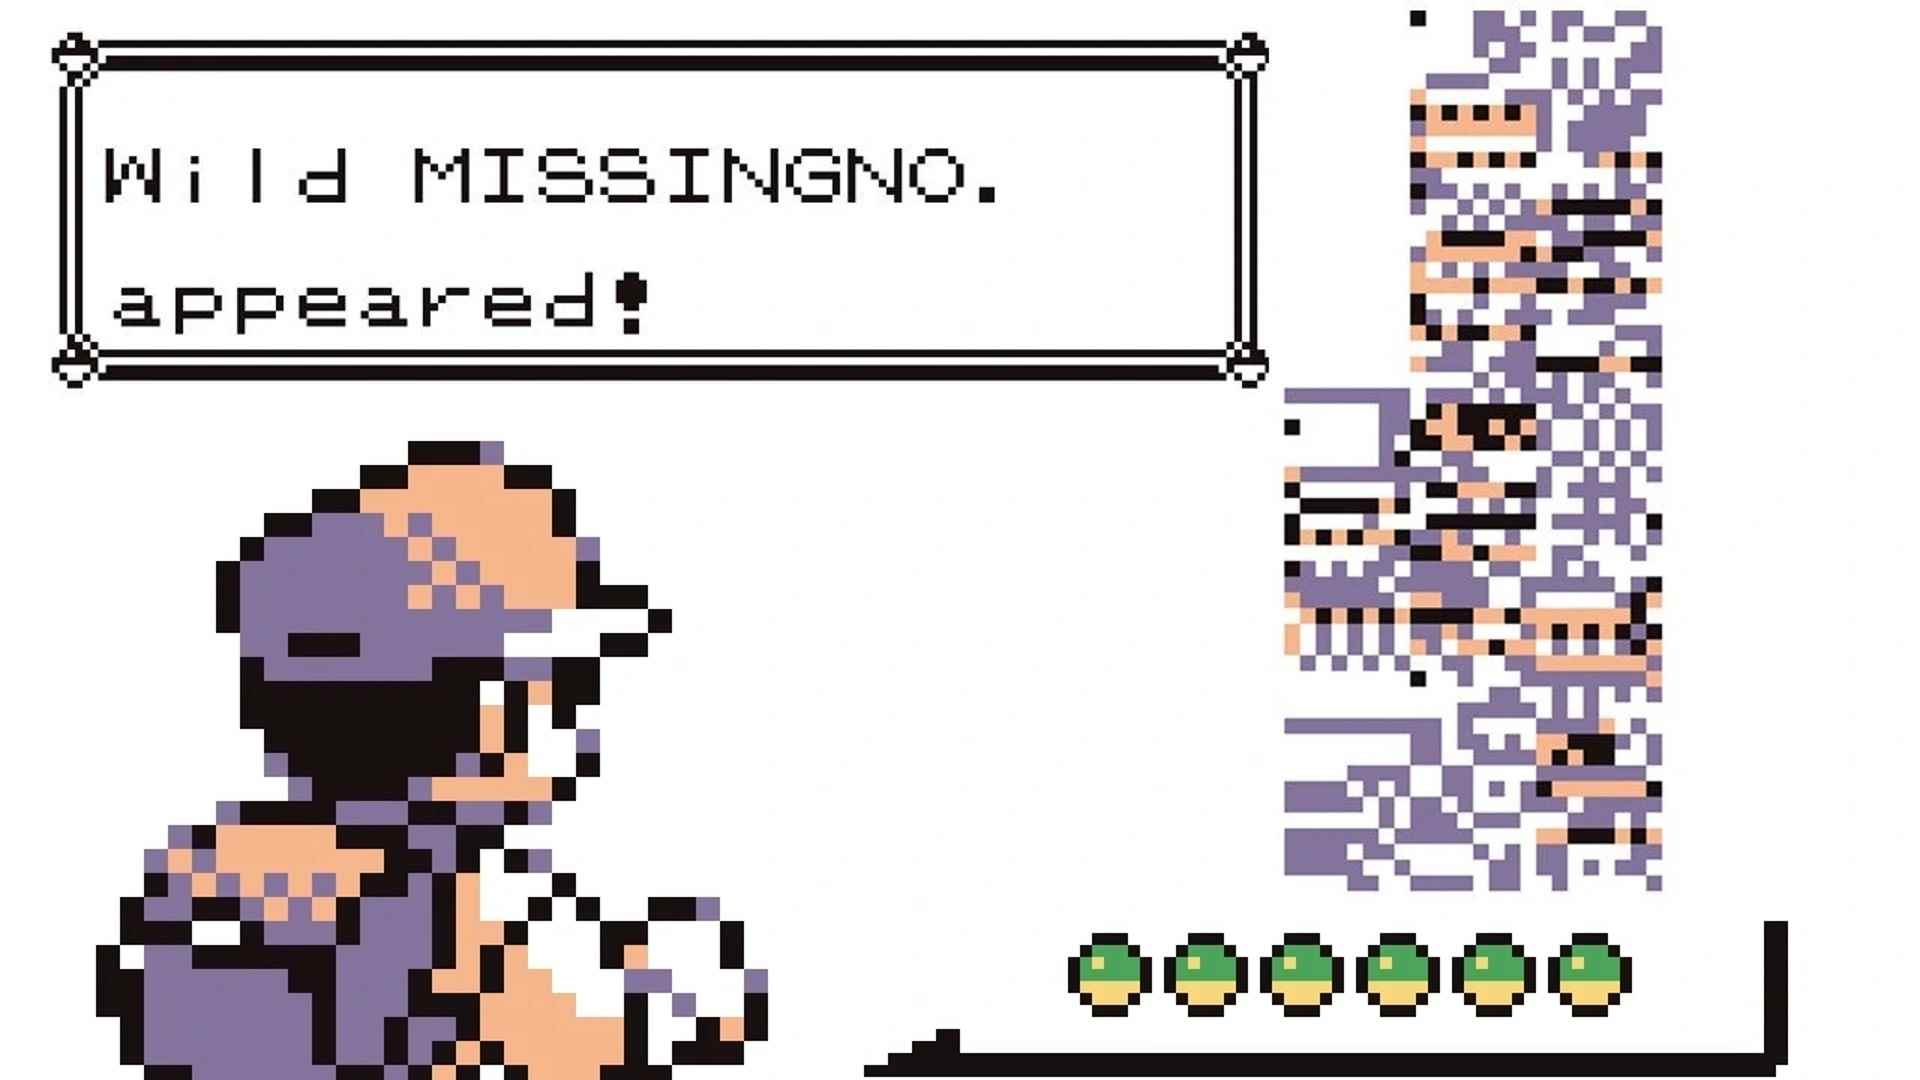 MissingNo, Pokemon Red and Blue'daki resmi olmayan bir Pokemon Pokemon'dur.